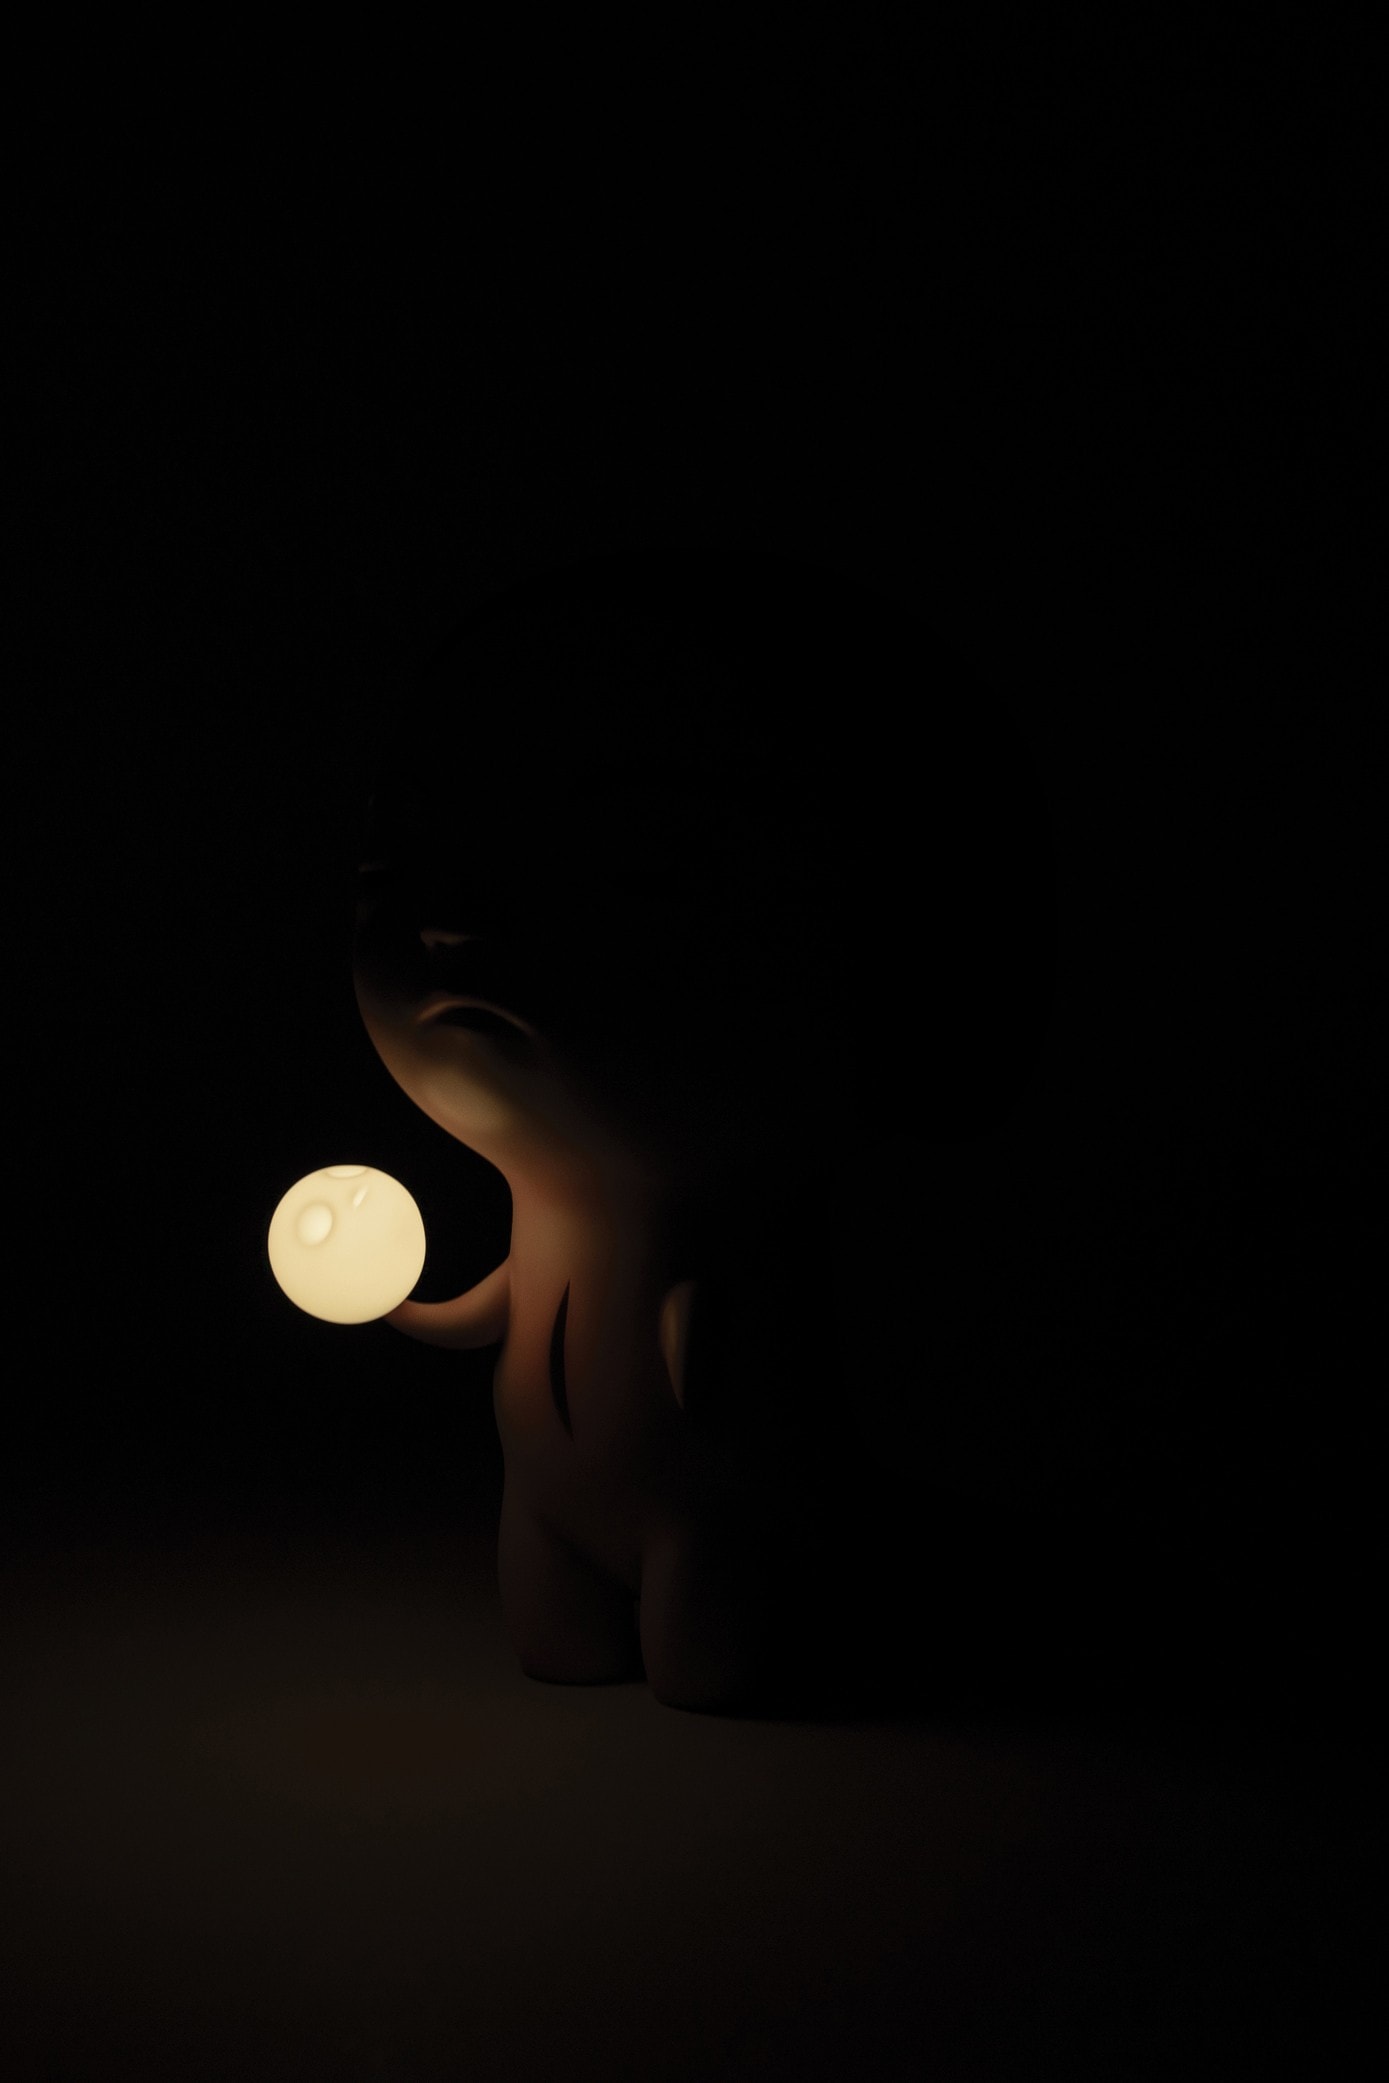 Roby Dwi Antono 最新雕塑「Mystique Moonlight Lamp」即將發售